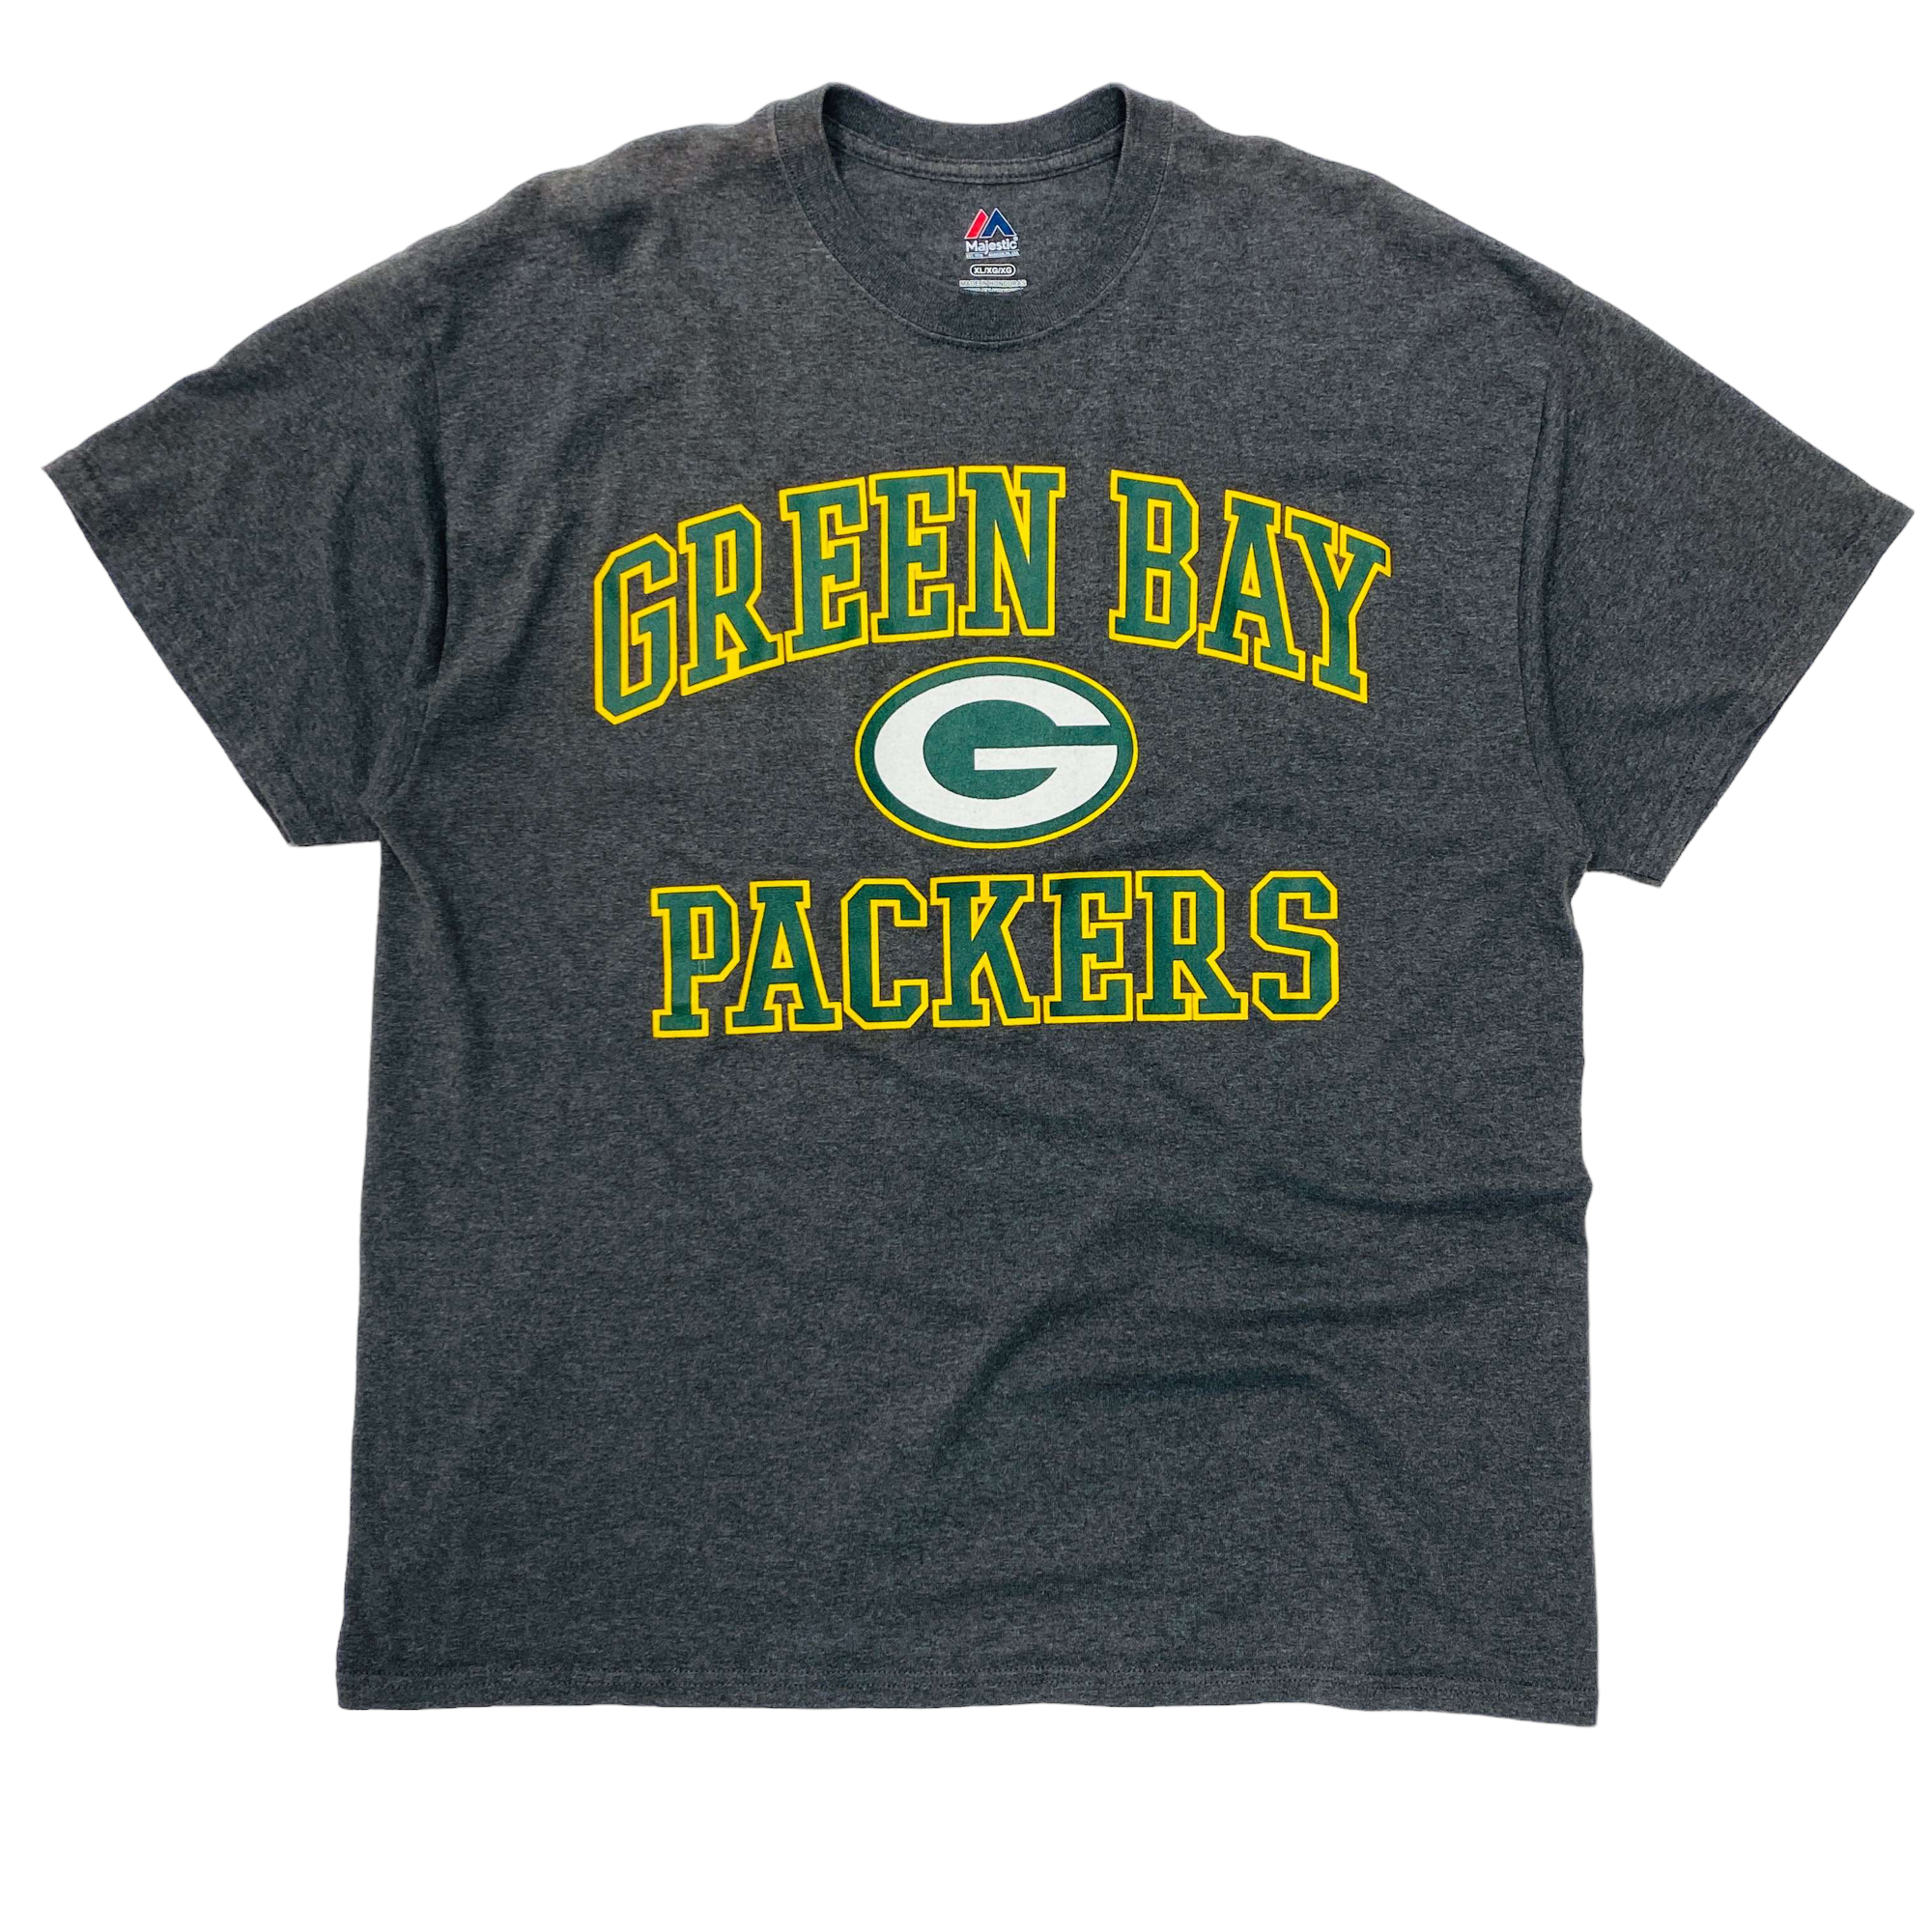 Green Bay Packers NFL T-Shirt - XL